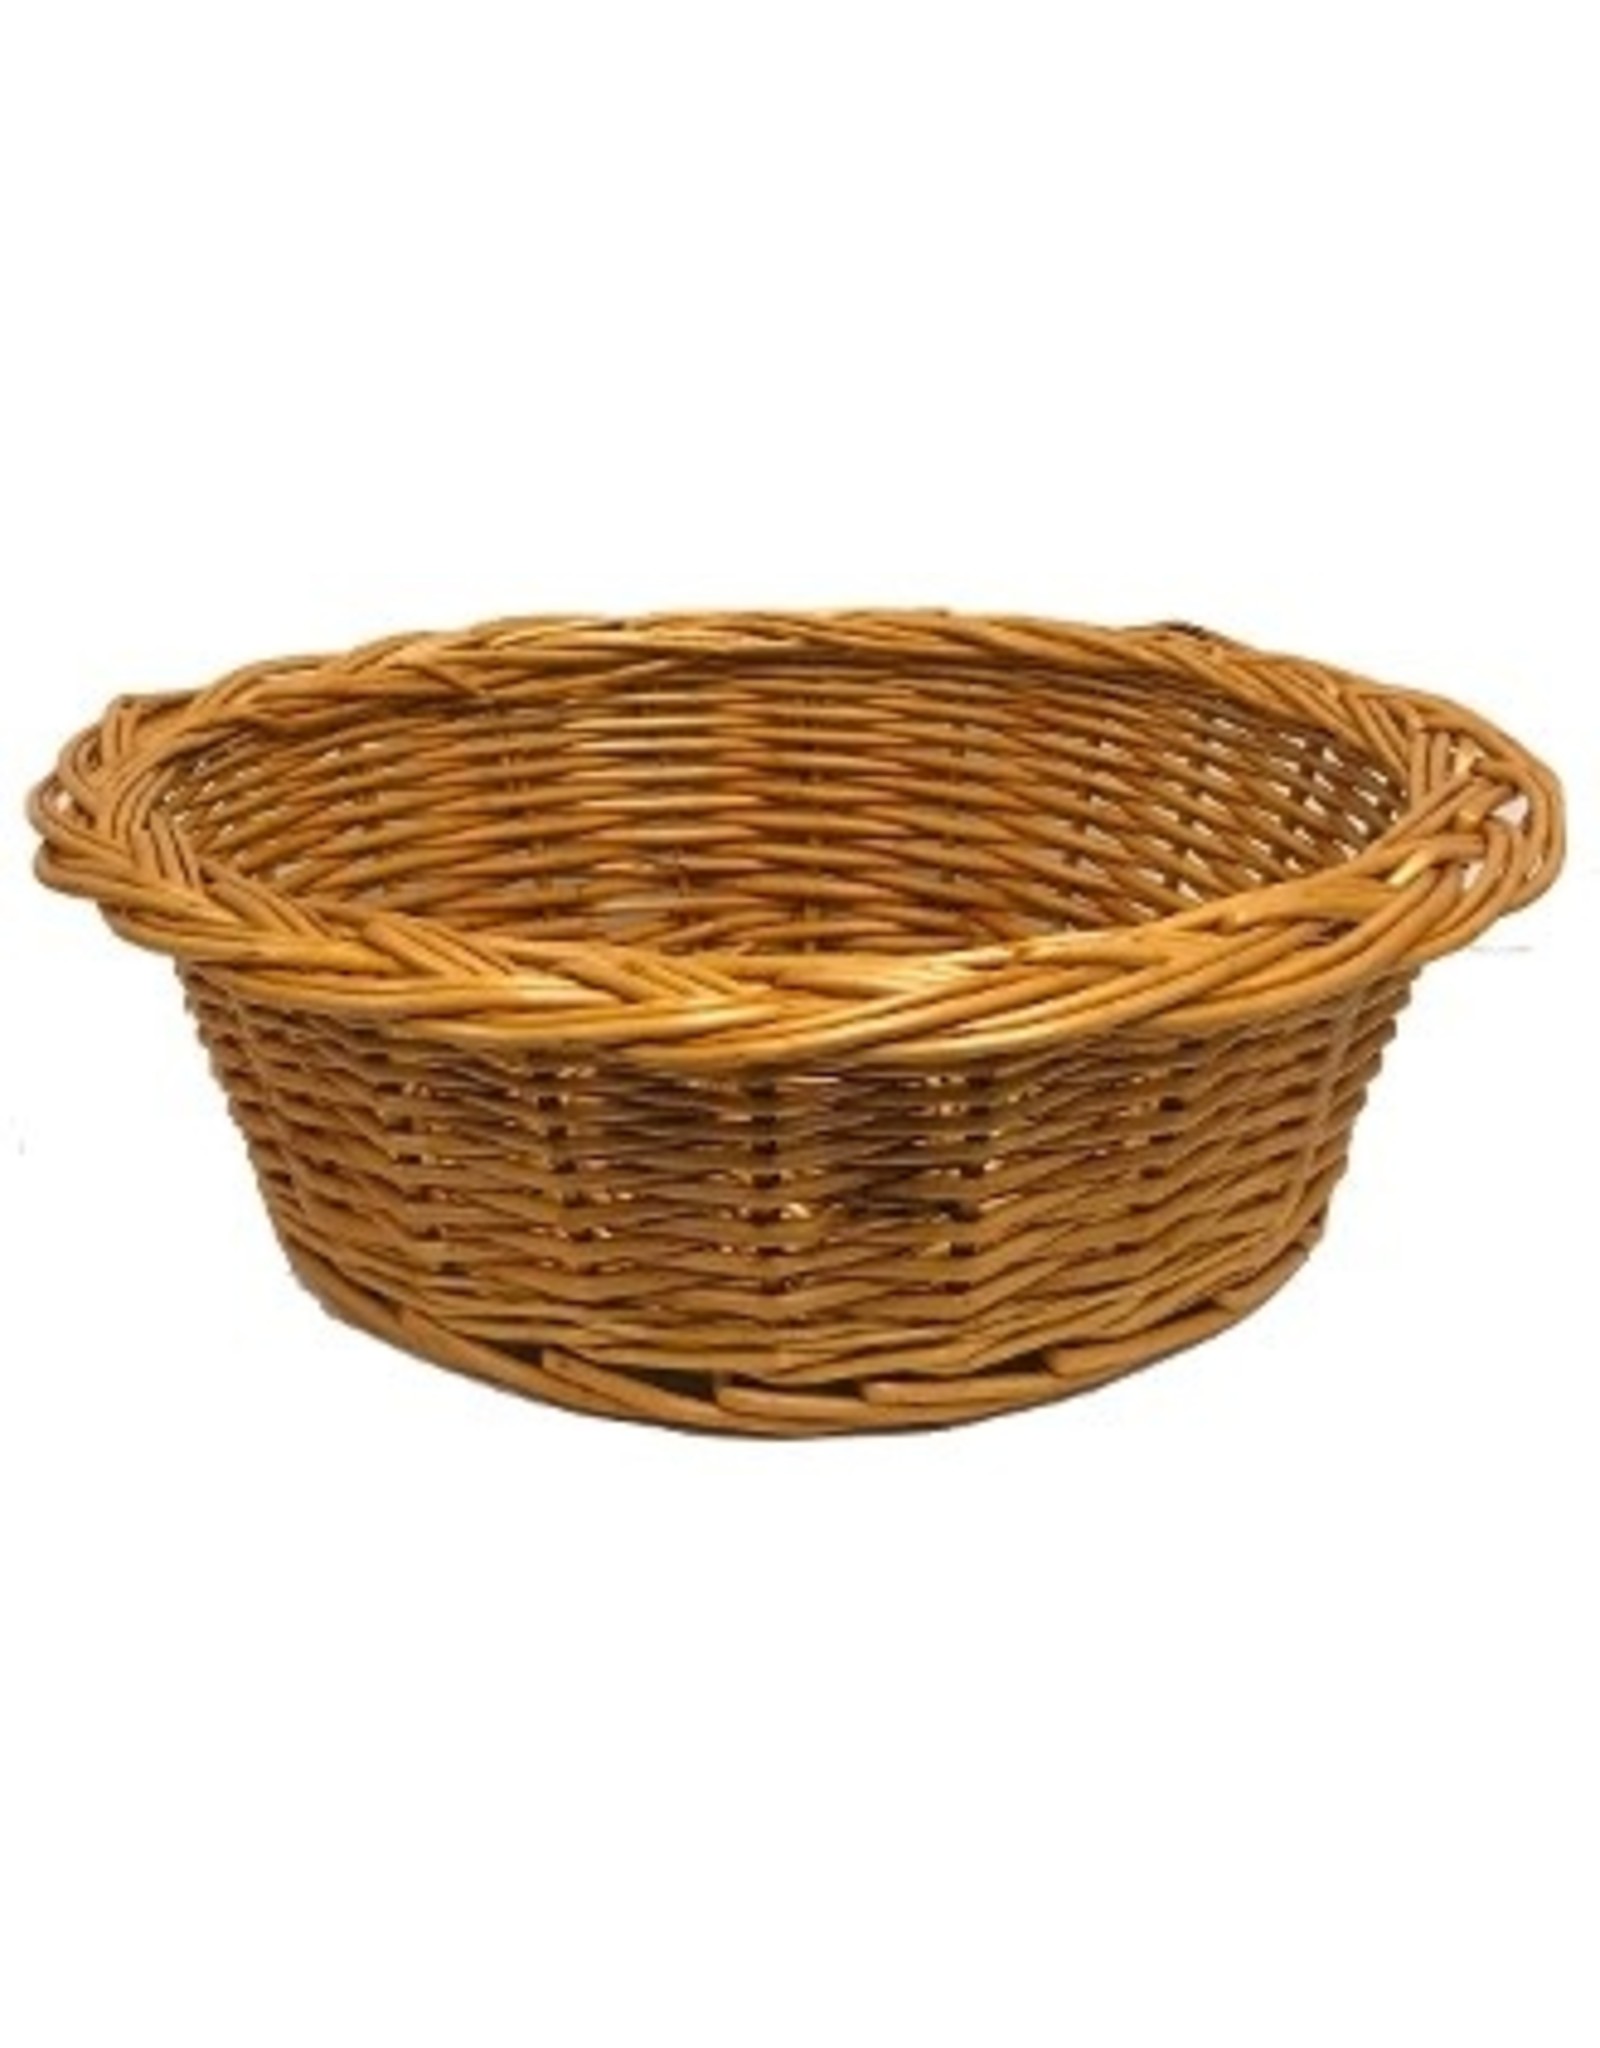 Remey, F.J. Round Collection Basket - 12" Diameter, 4" Deep